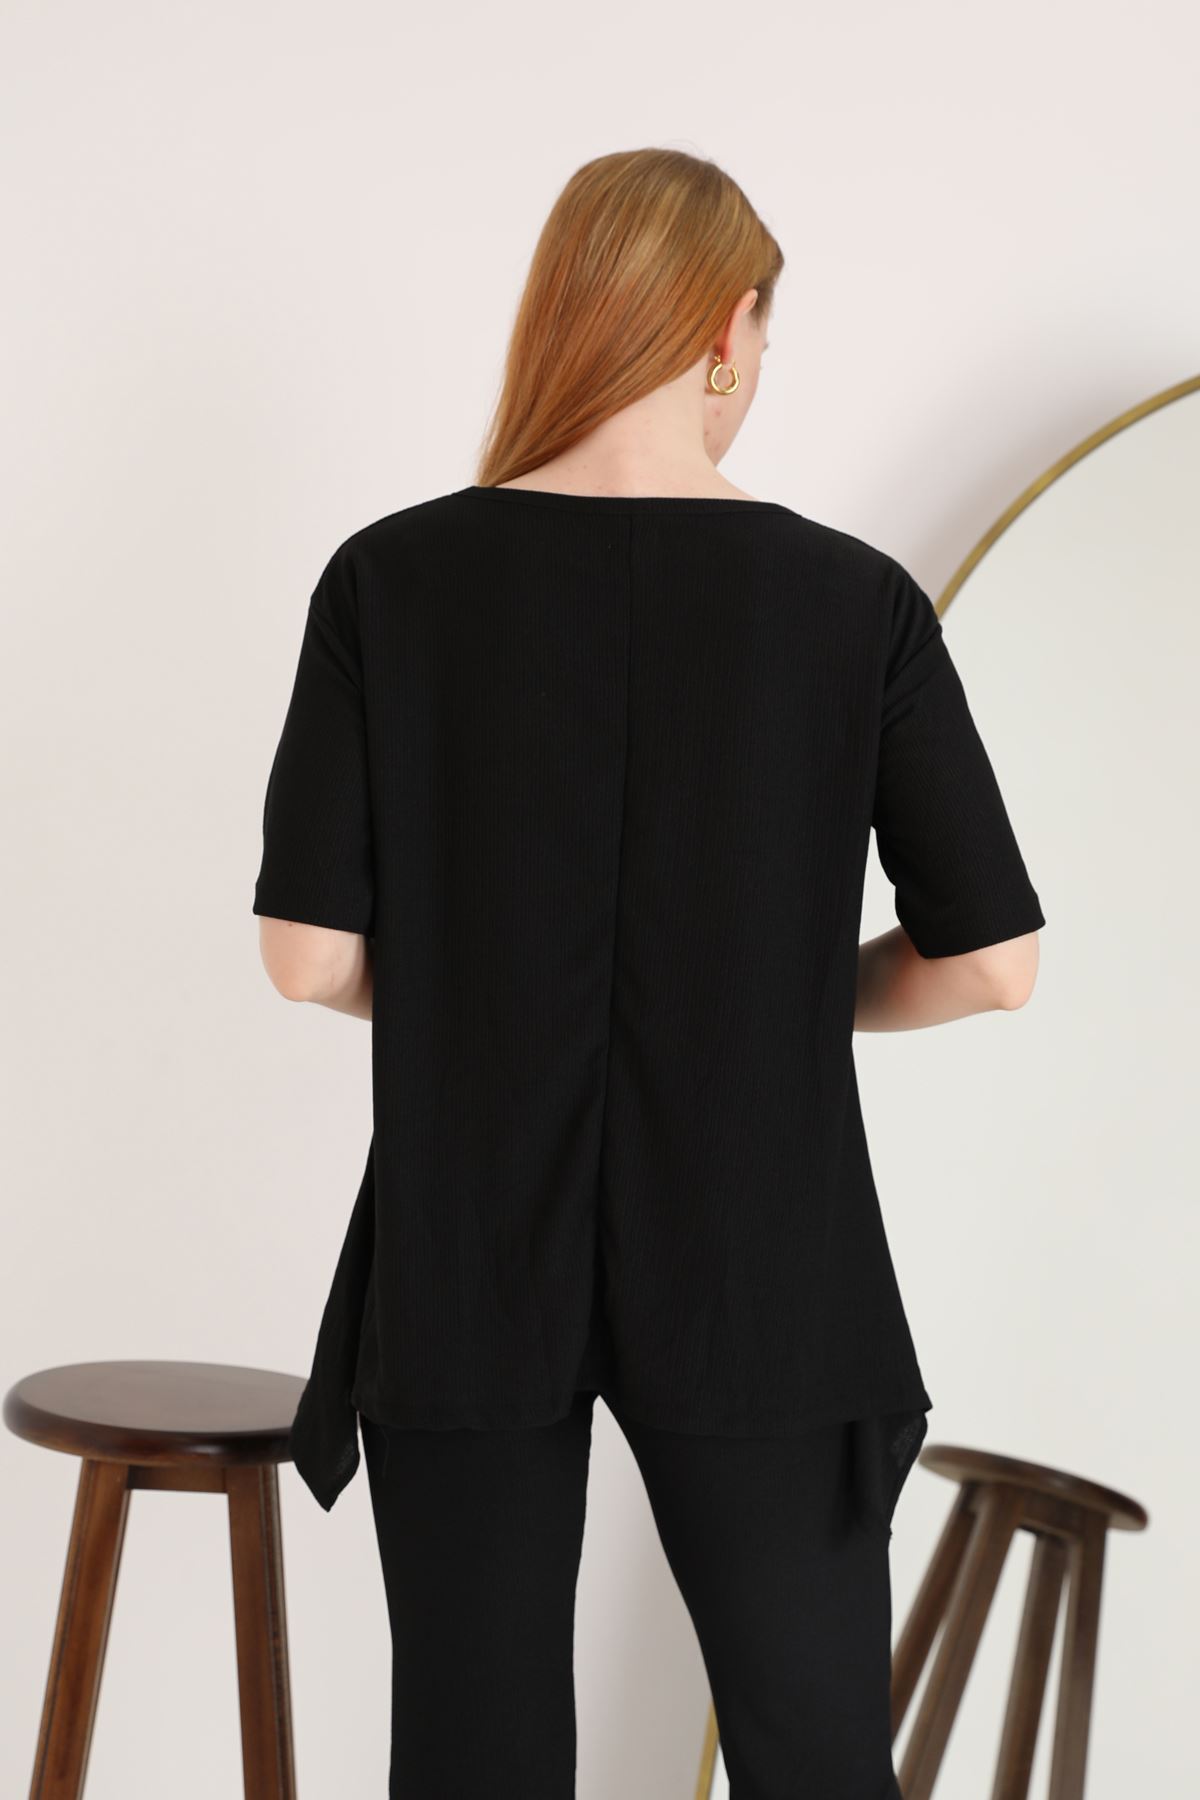 Cress Fabric Asymmetrical Cut Women's Suit-Black